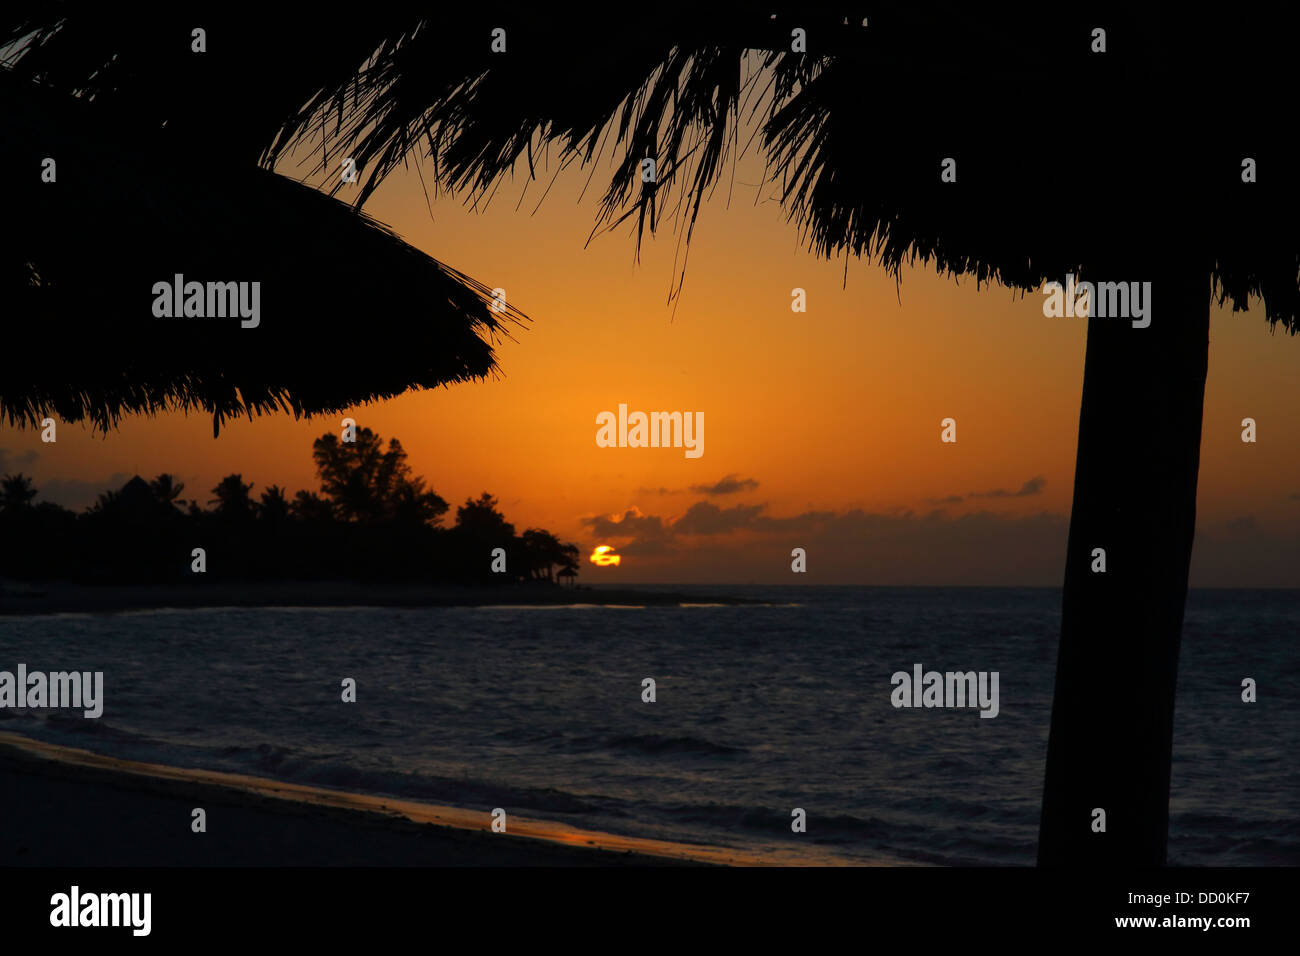 Sunset, Caribbean beach scene with beach parasols in sillohette. Stock Photo